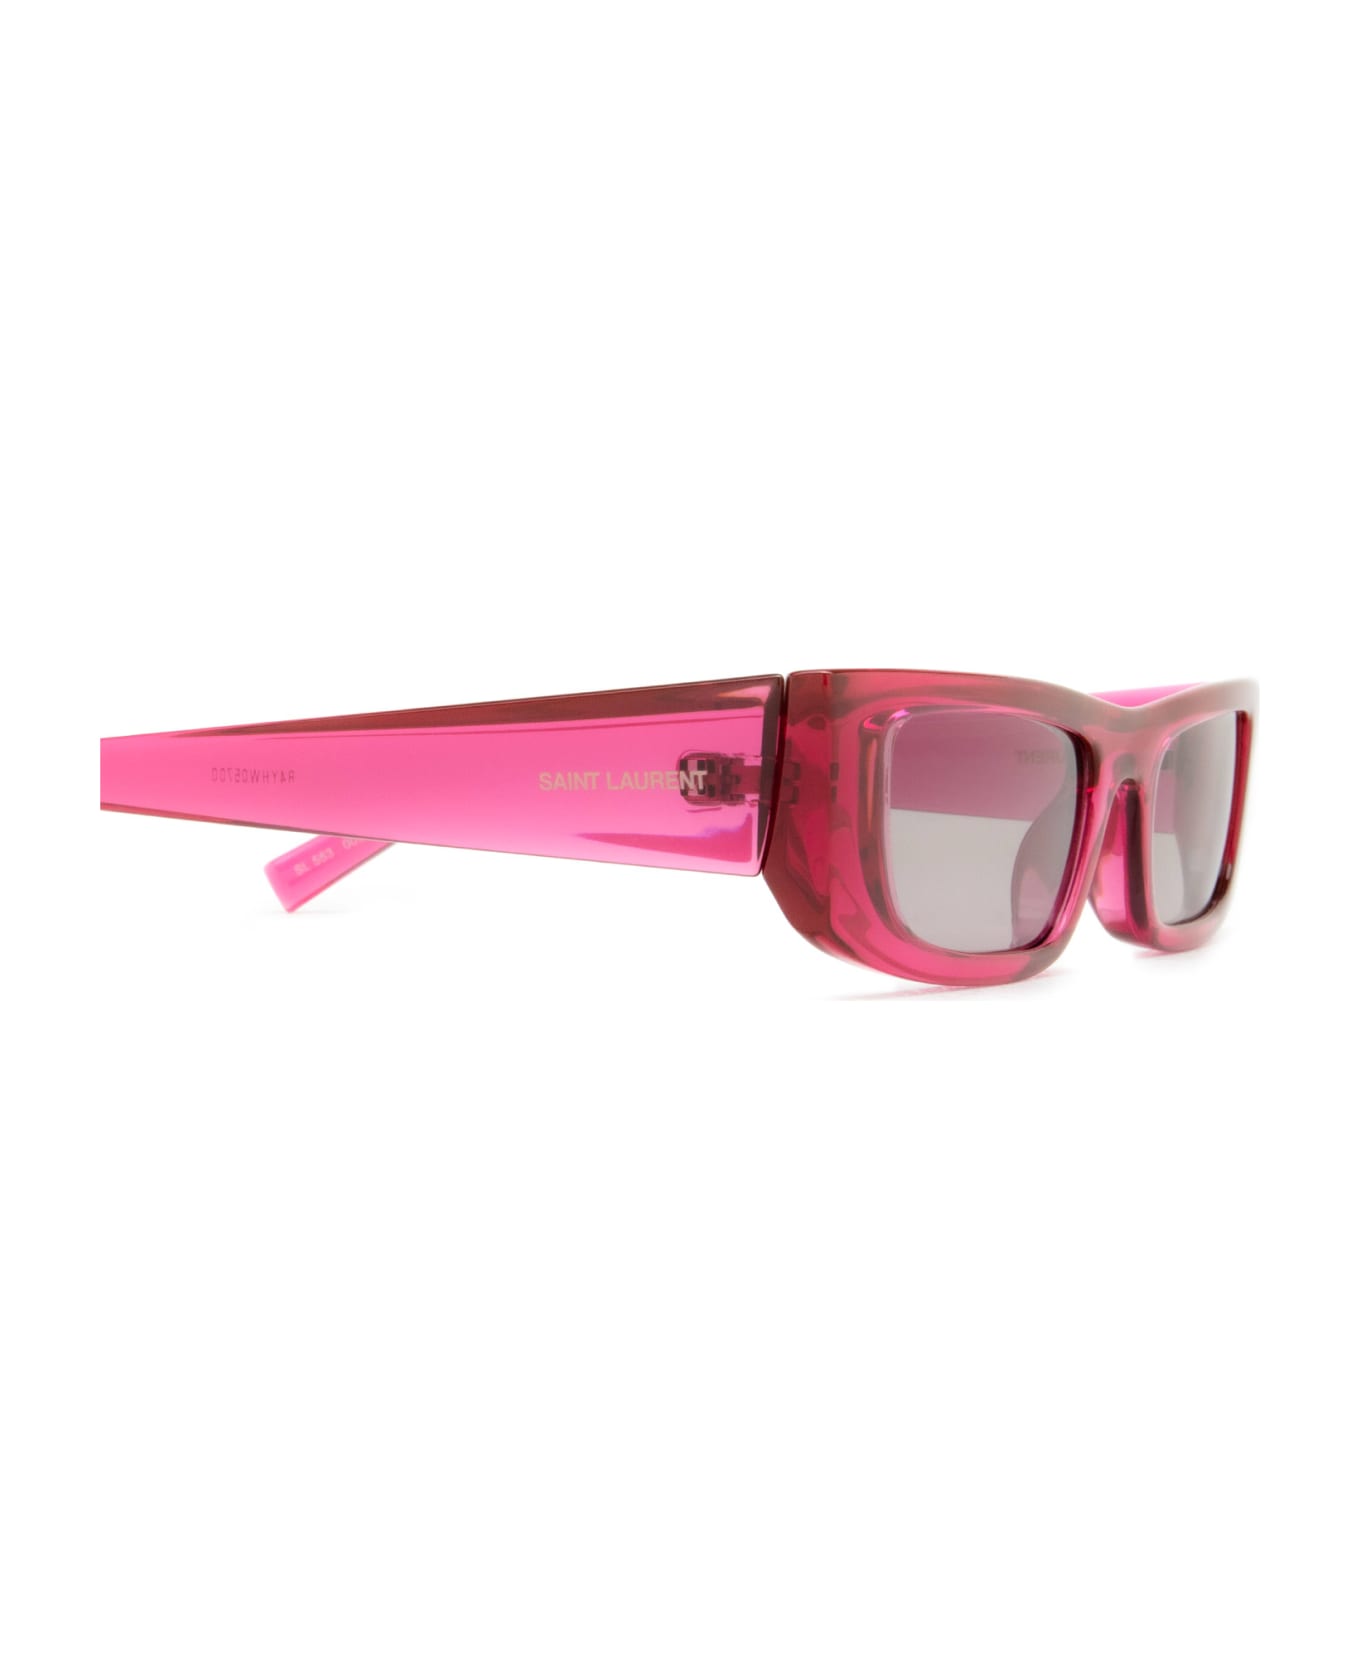 Saint Laurent Eyewear Sl 553 Pink Sunglasses - Pink